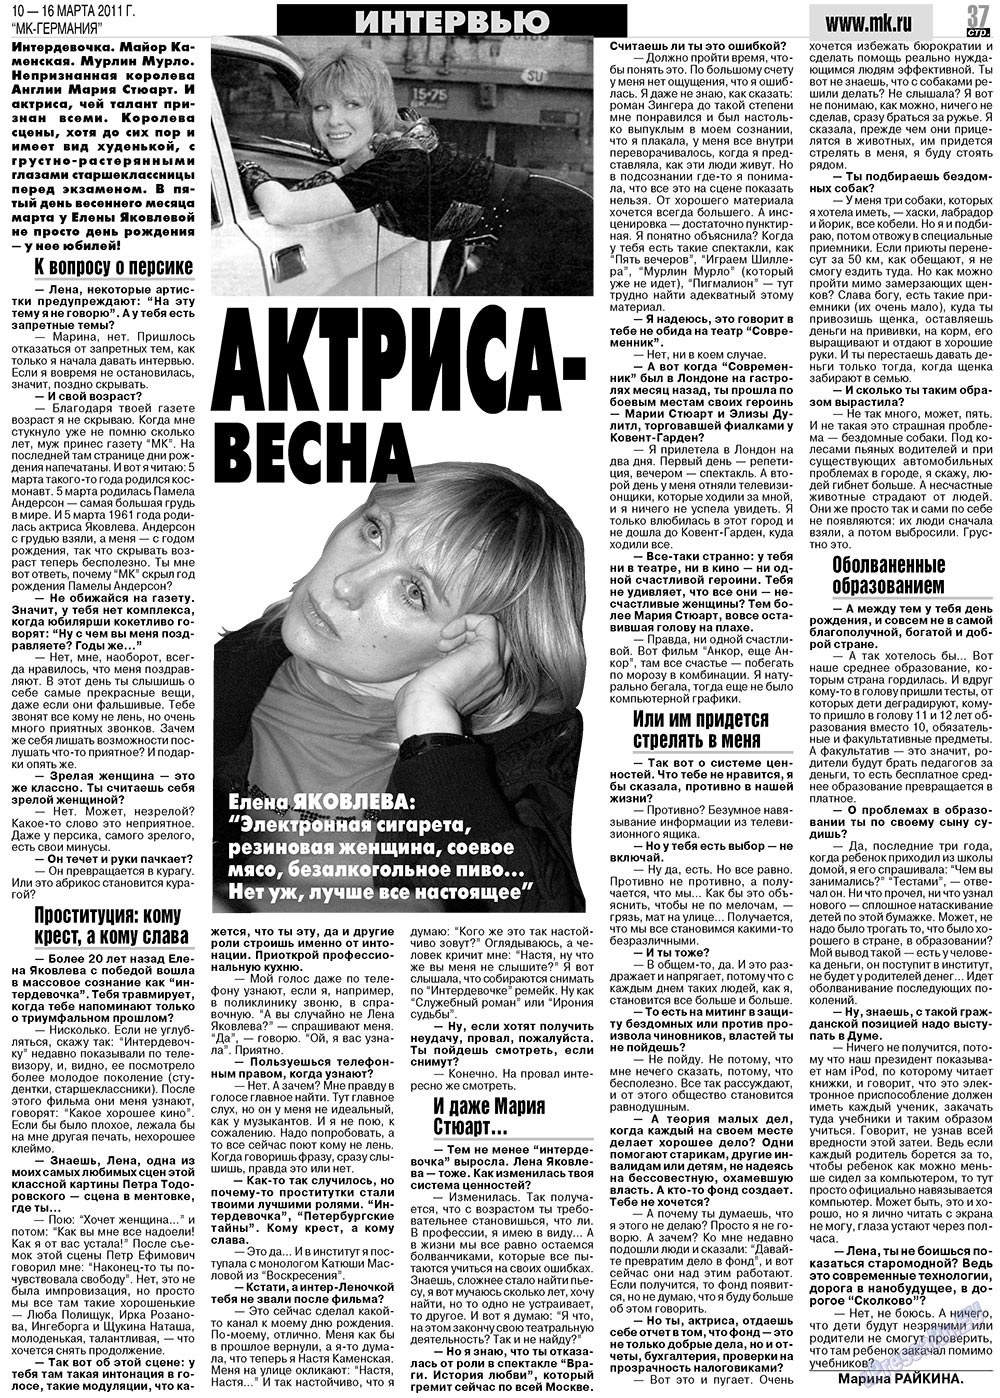 МК-Германия, газета. 2011 №10 стр.37